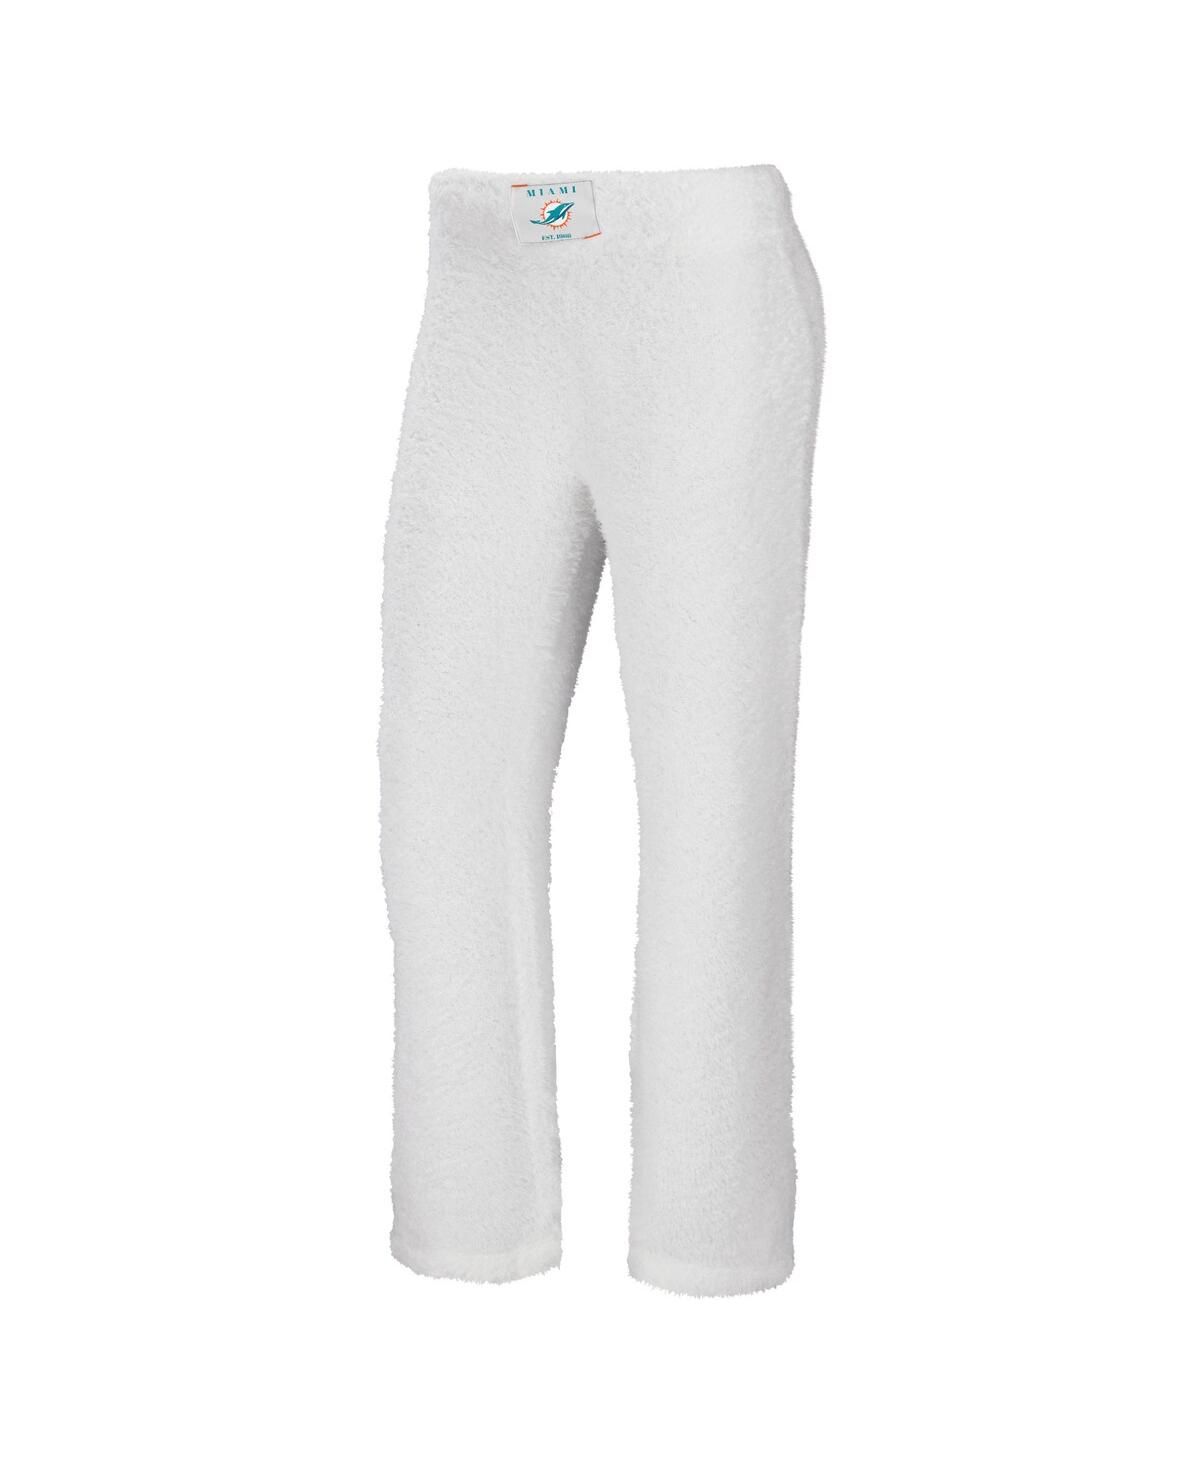 Shop Wear By Erin Andrews Women's  Cream Miami Dolphins Cozy Scoop Neck Tank Top Pants Sleep Set